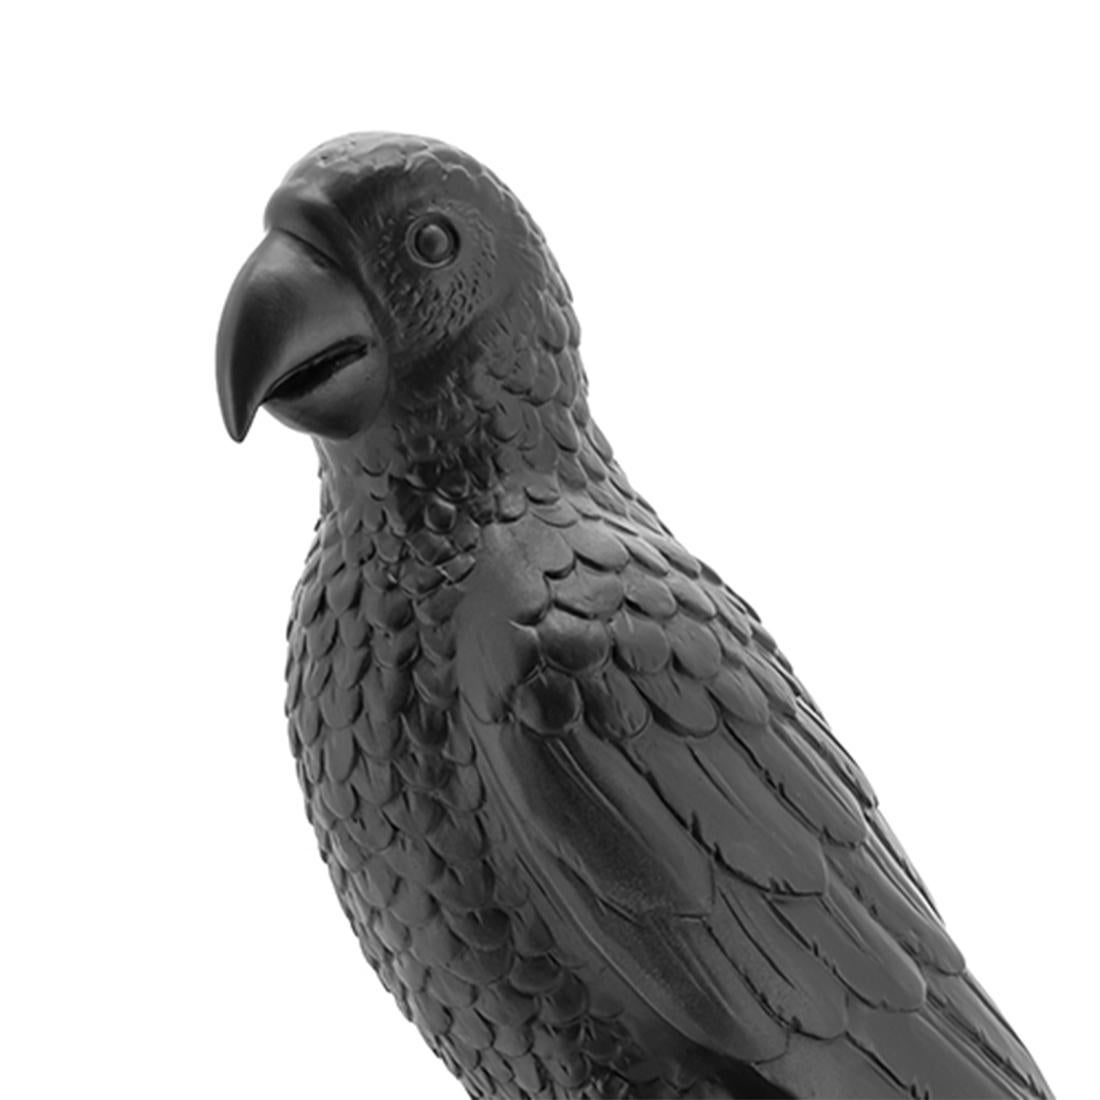 Blackened Black Parrot Sculpture For Sale